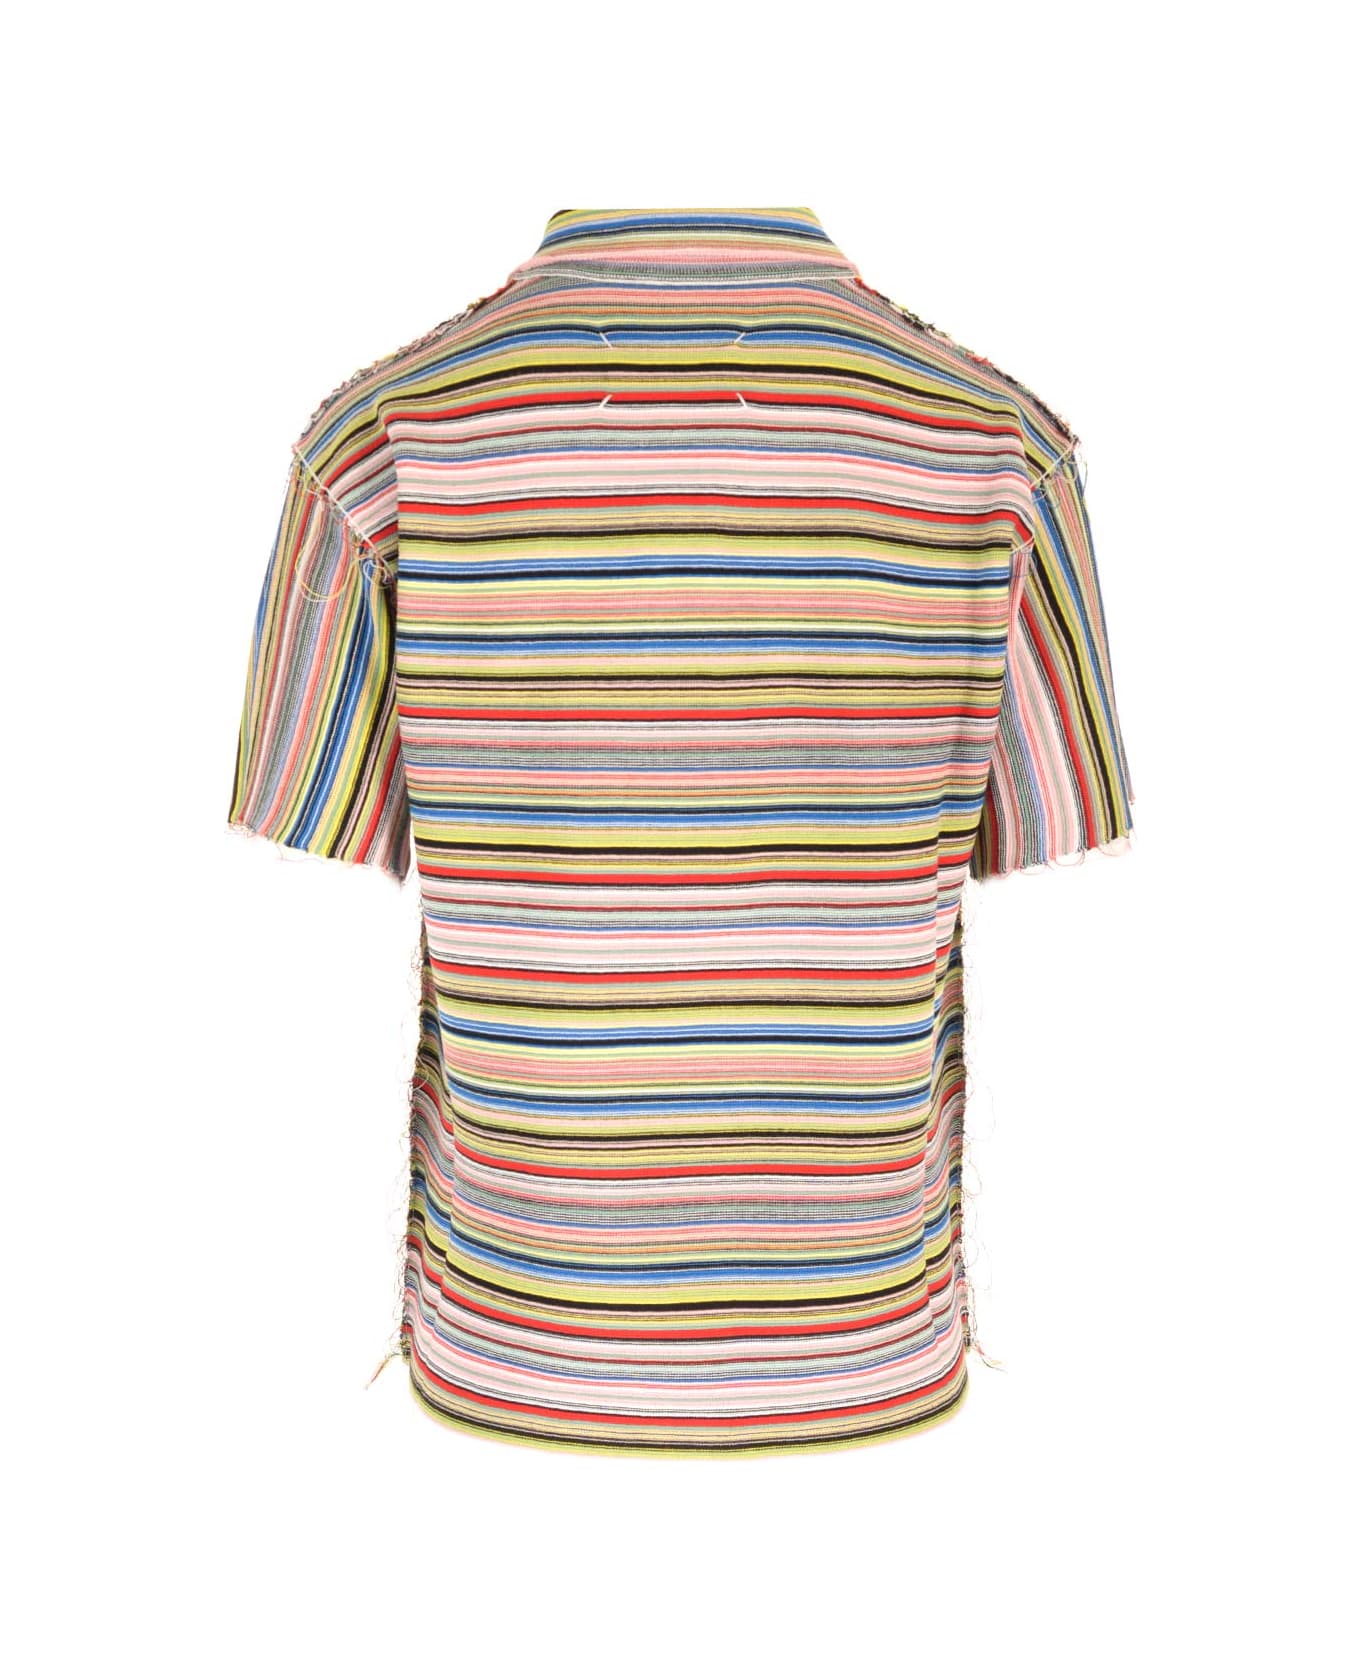 Maison Margiela Striped Jersey Polo Shirt - Stripes color mix